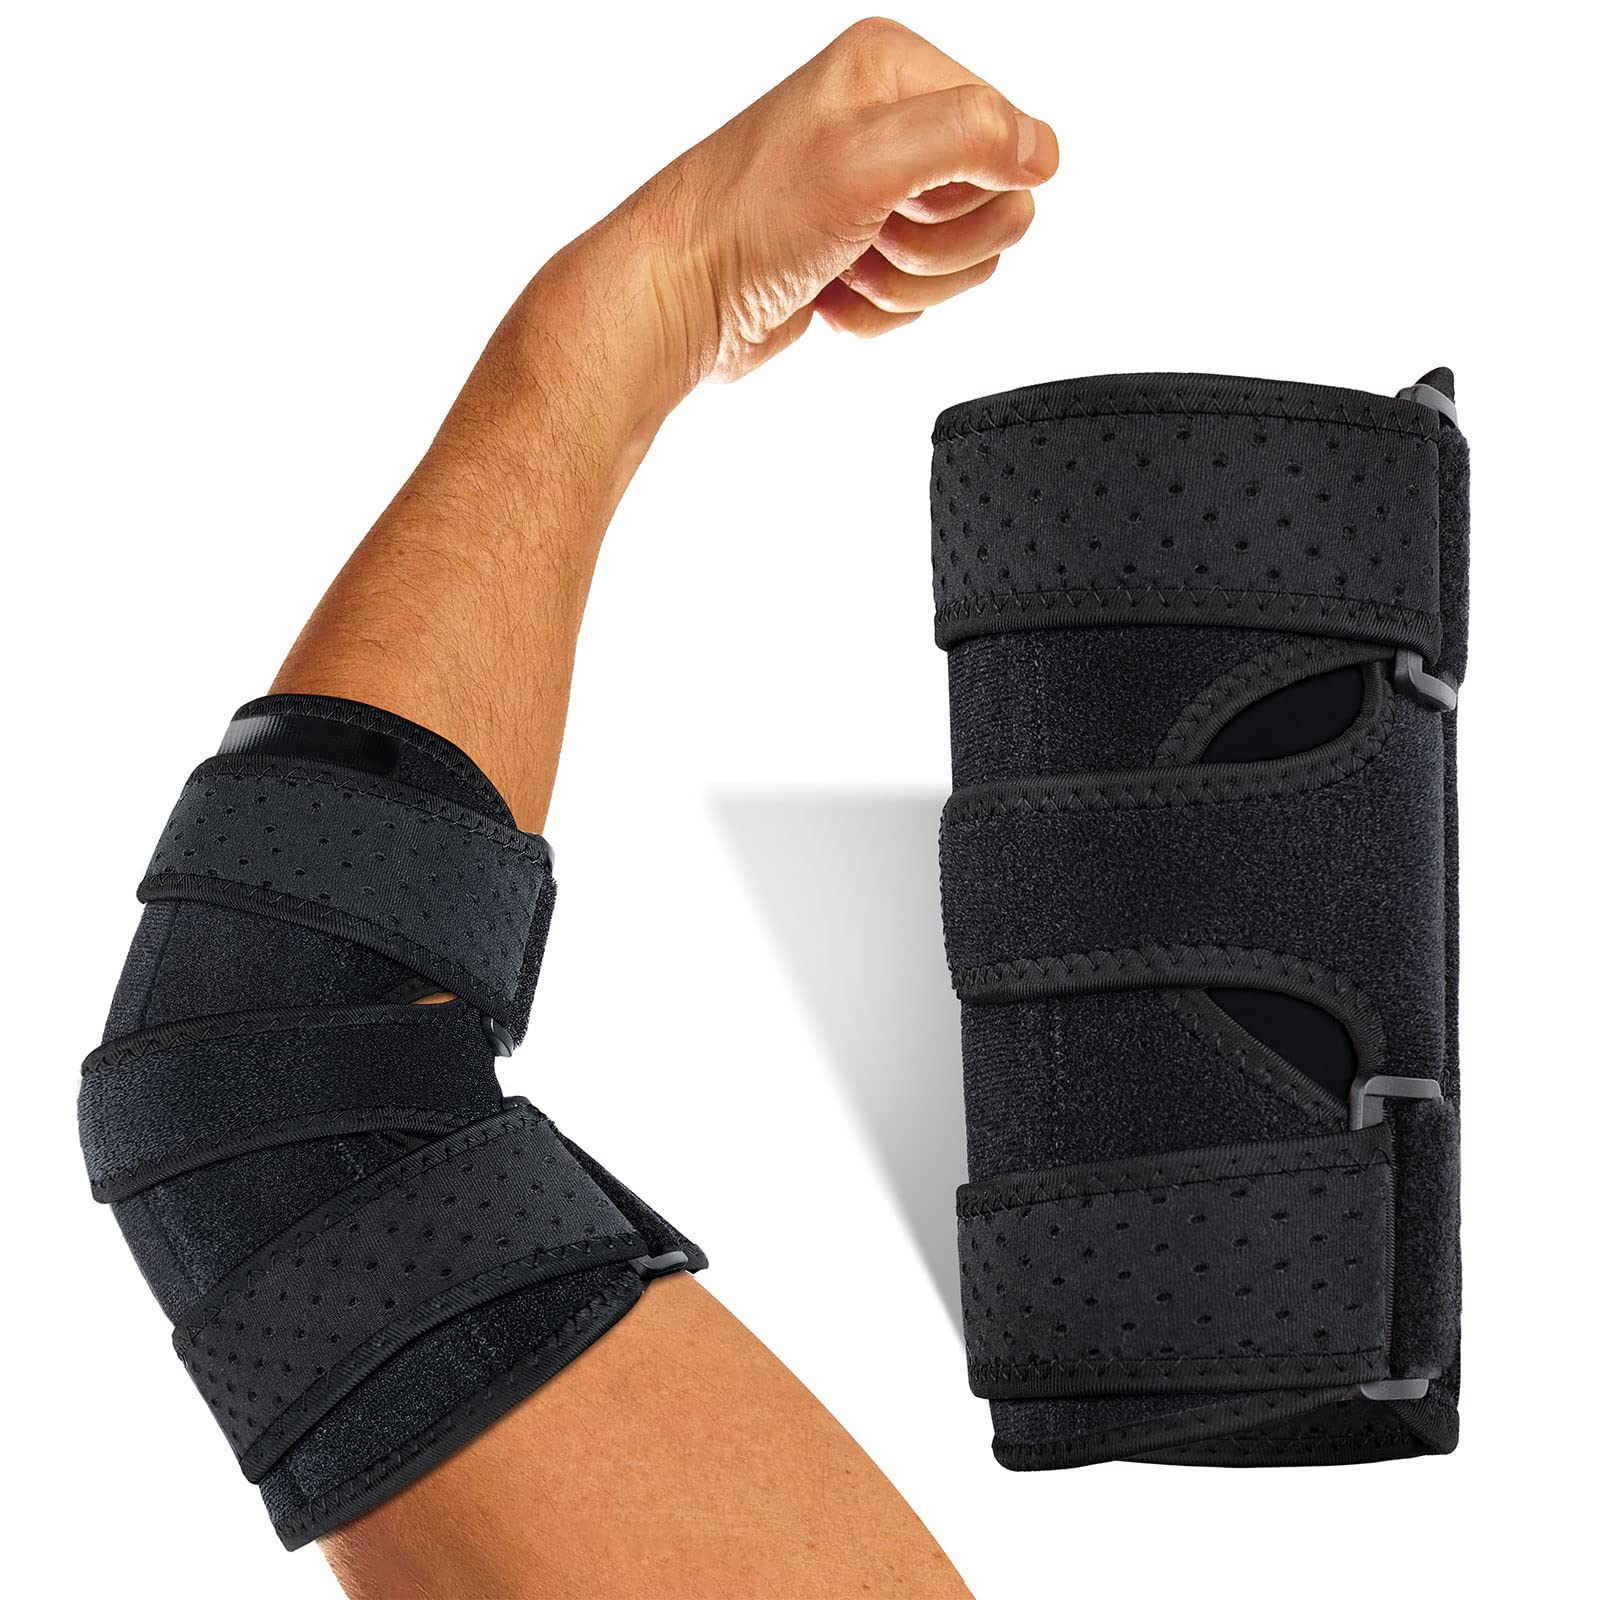 Elbow Brace for Pain Relief, Elbow Splint Immobilizer for Cubital